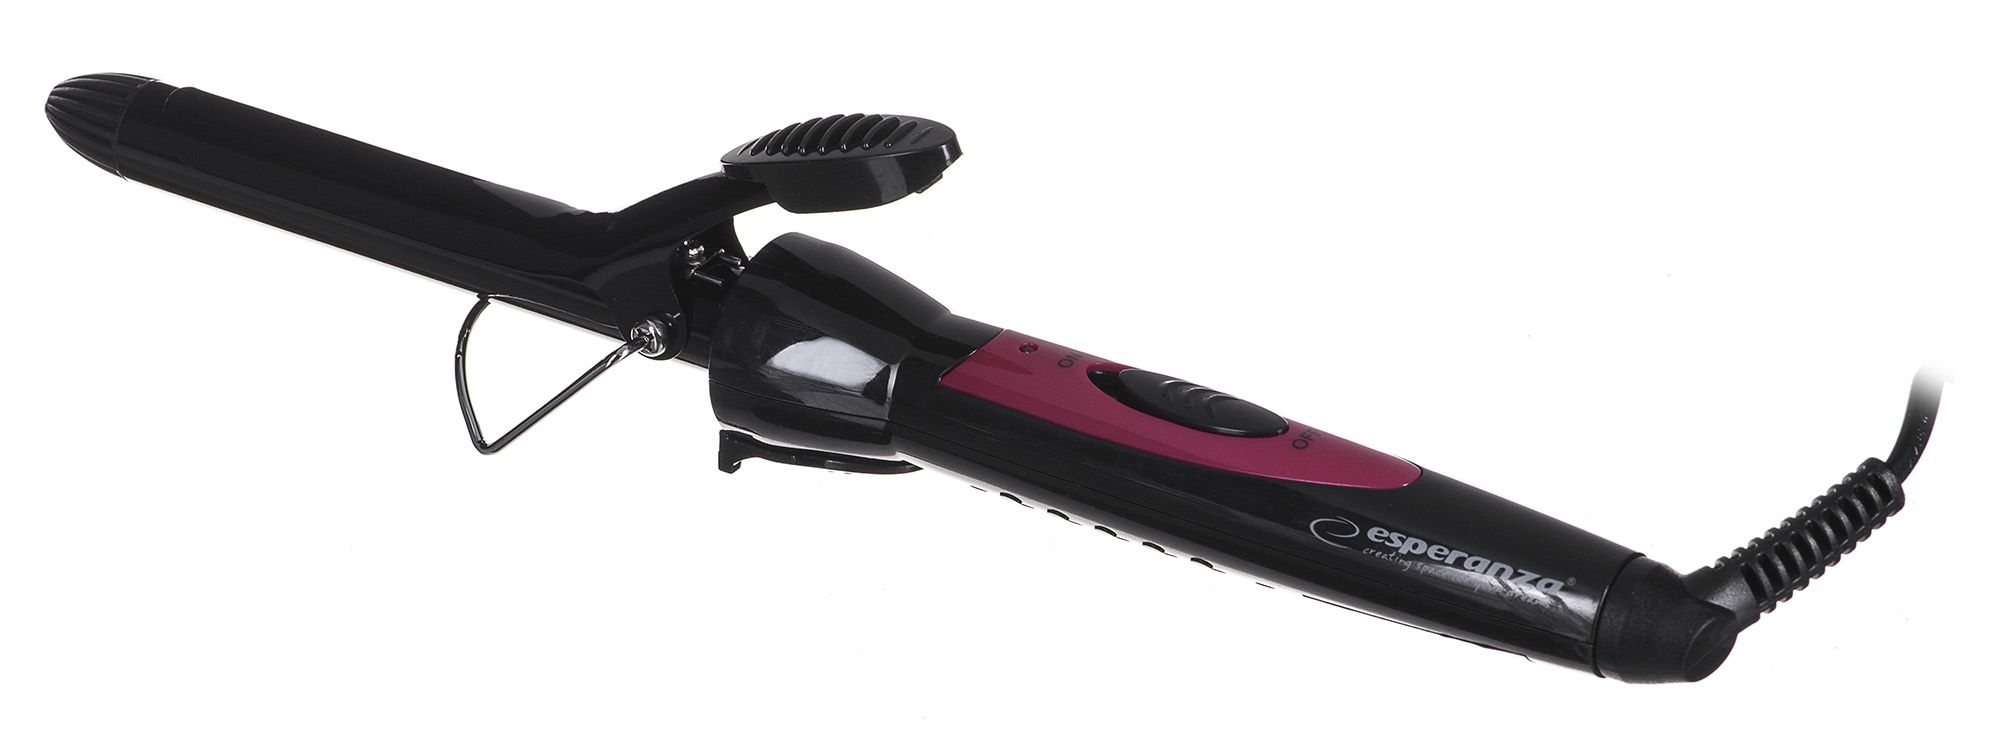 Esperanza EBL004 hair styling tool Curling iron Black 1.7 m 25 W_2